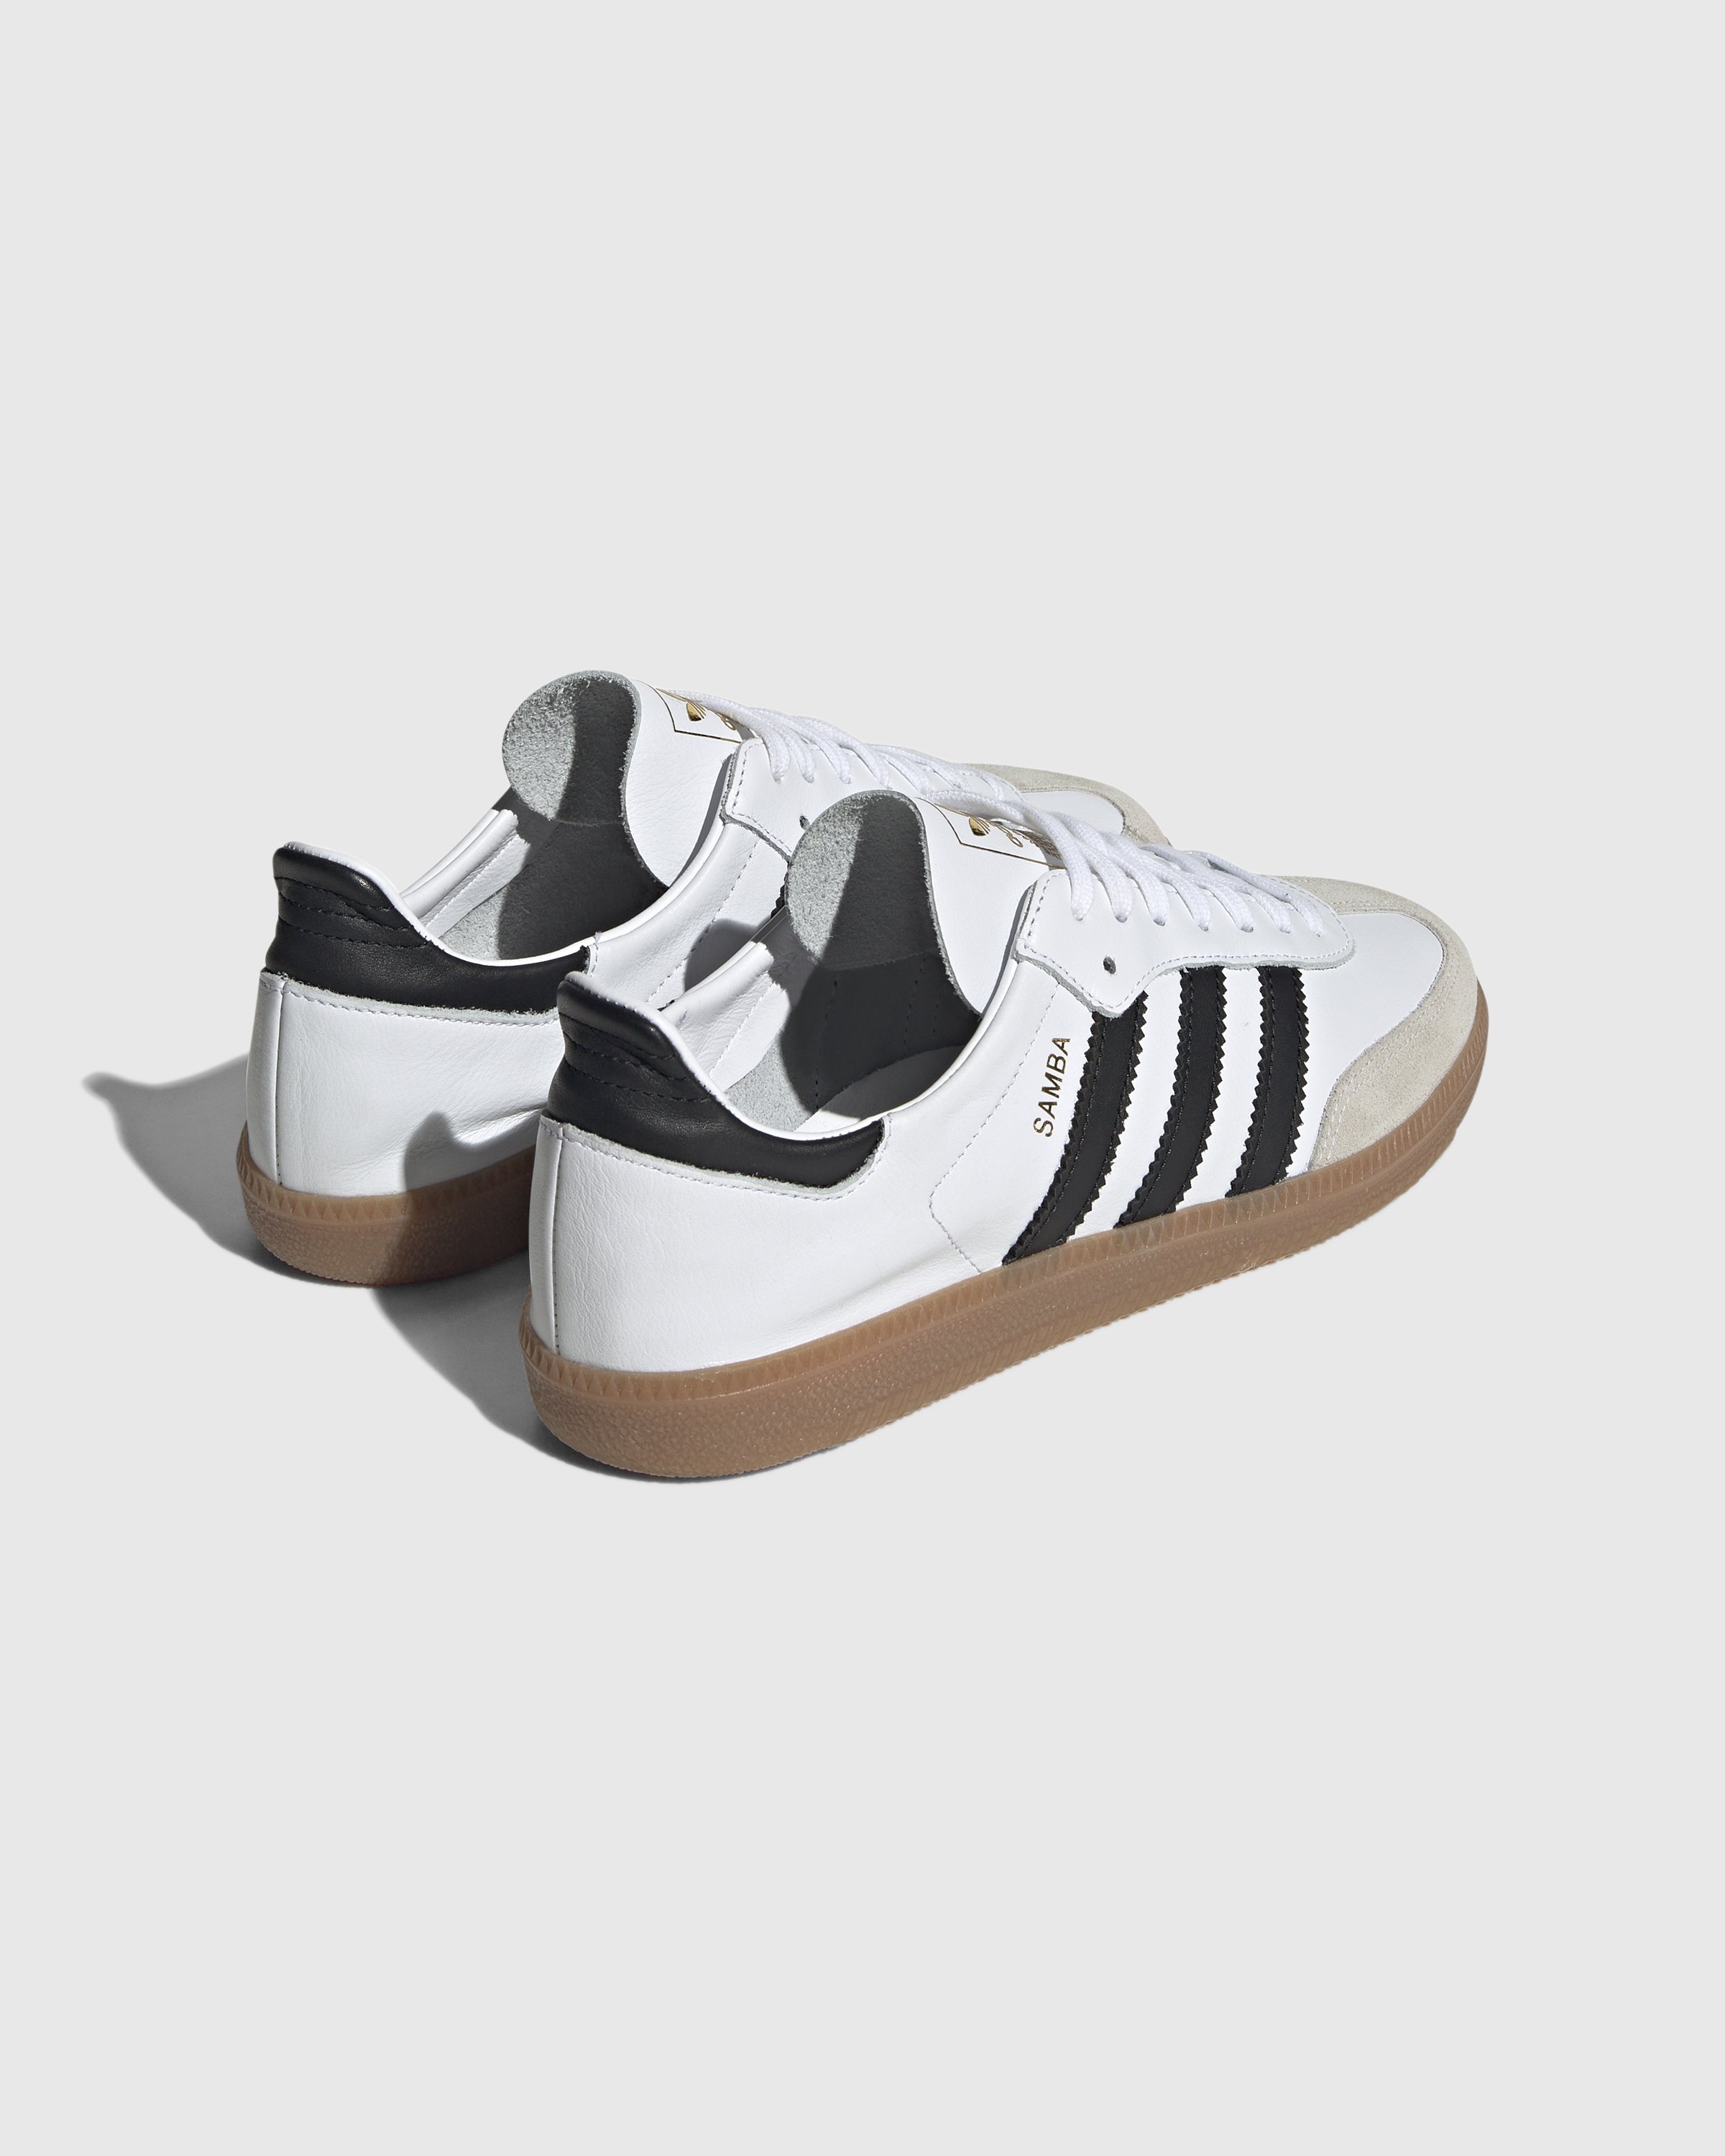 Adidas - Samba Decon White/Black/Greone - Footwear - White - Image 3